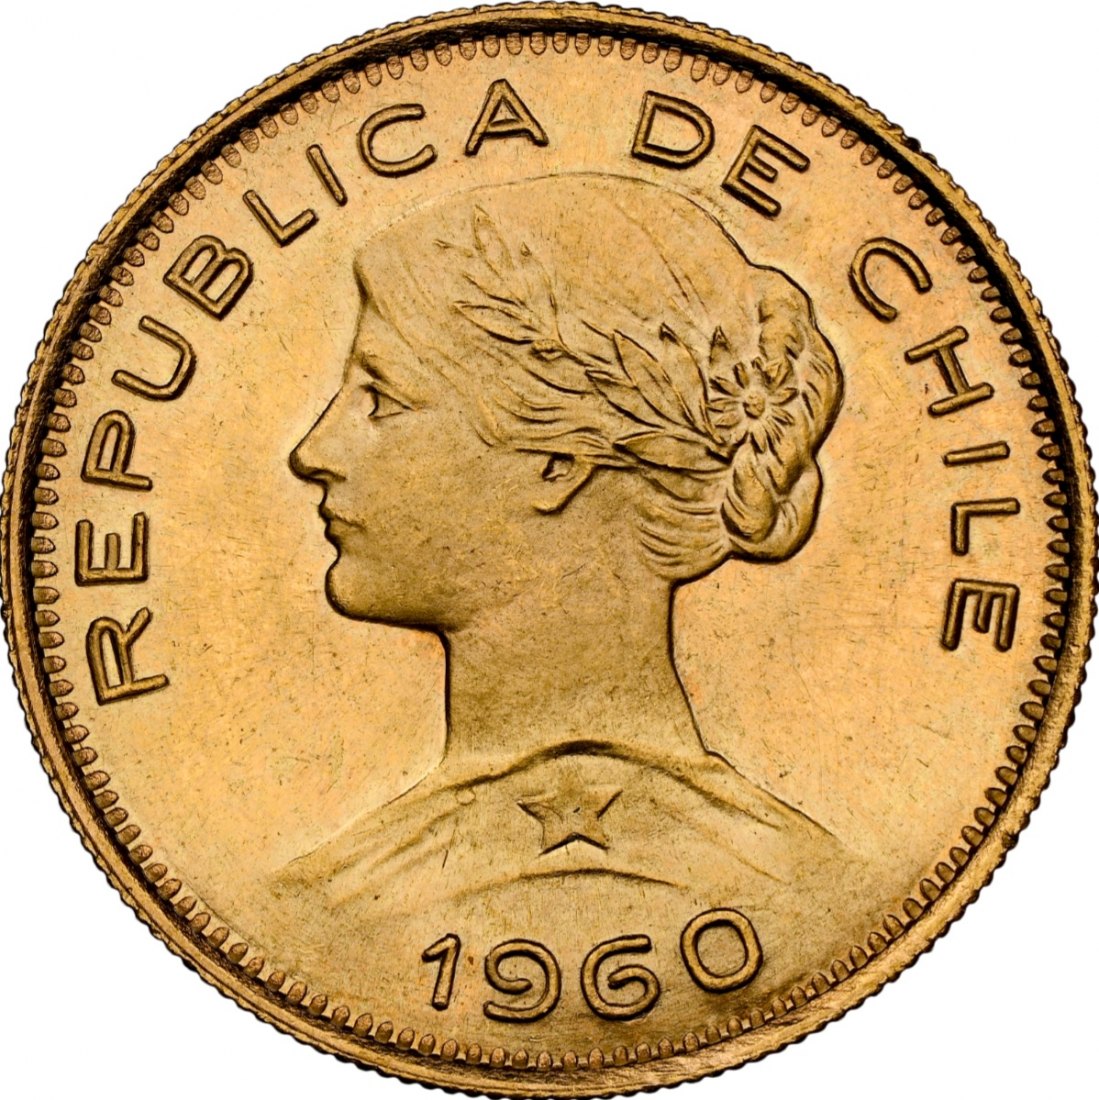  Chile 100 Pesos 1960 SO | NGC MS65 | 18,31 g Feingold   